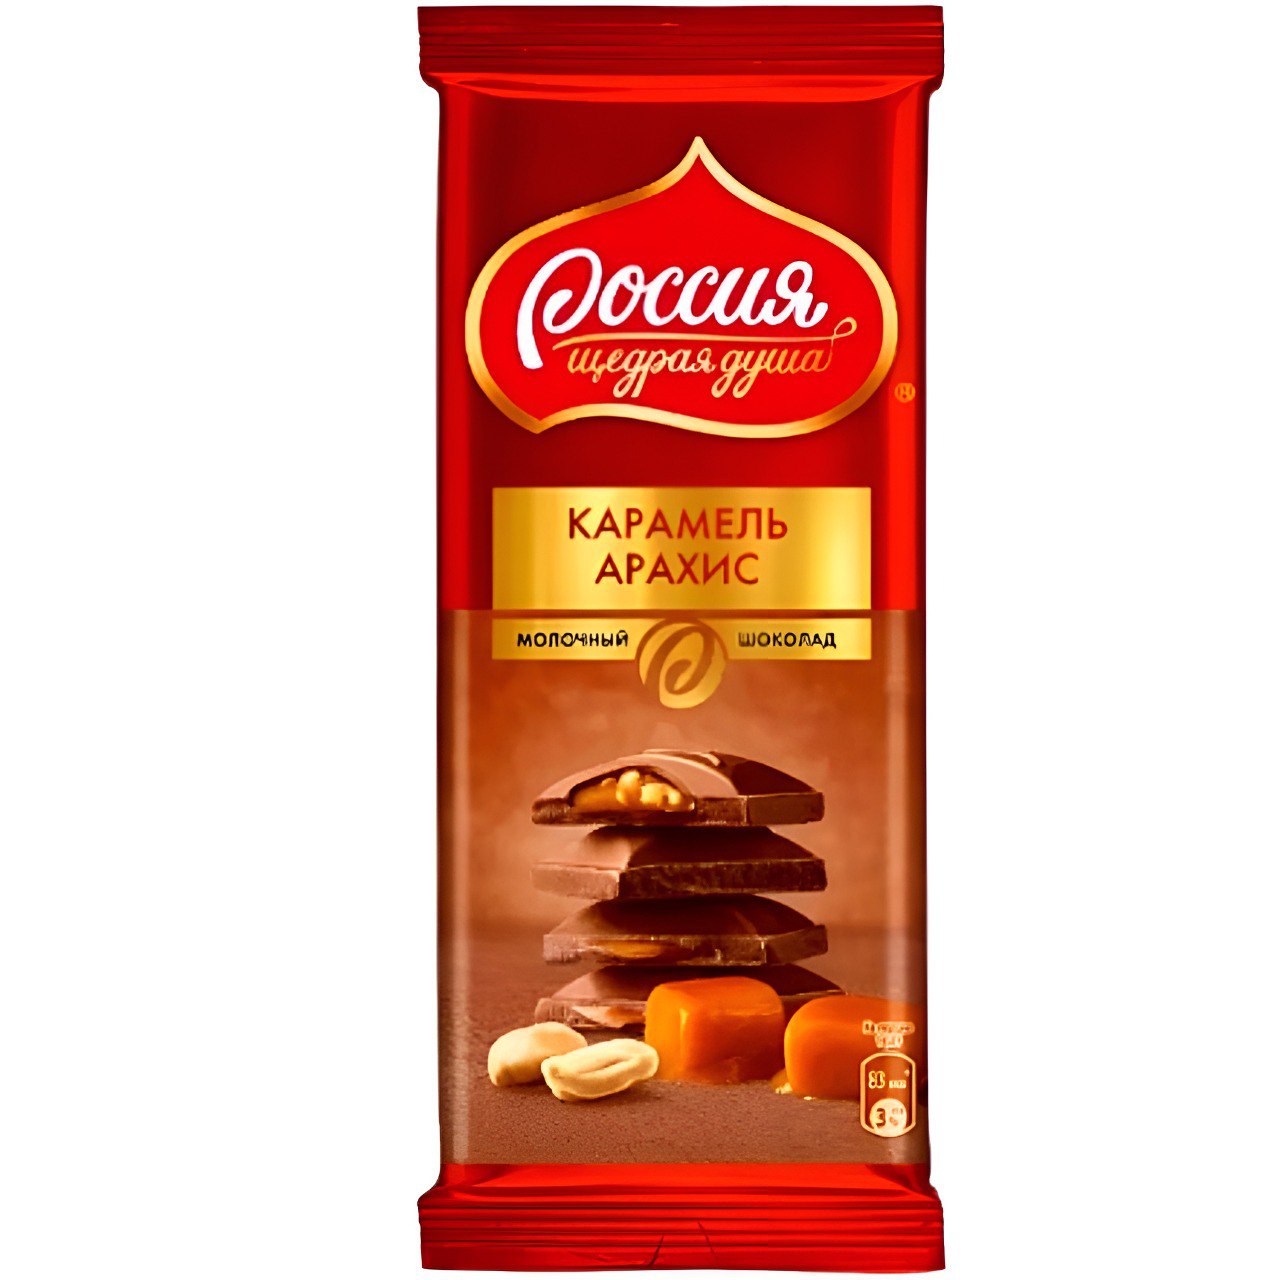 Россия щедрая душа шоколад карамель арахис